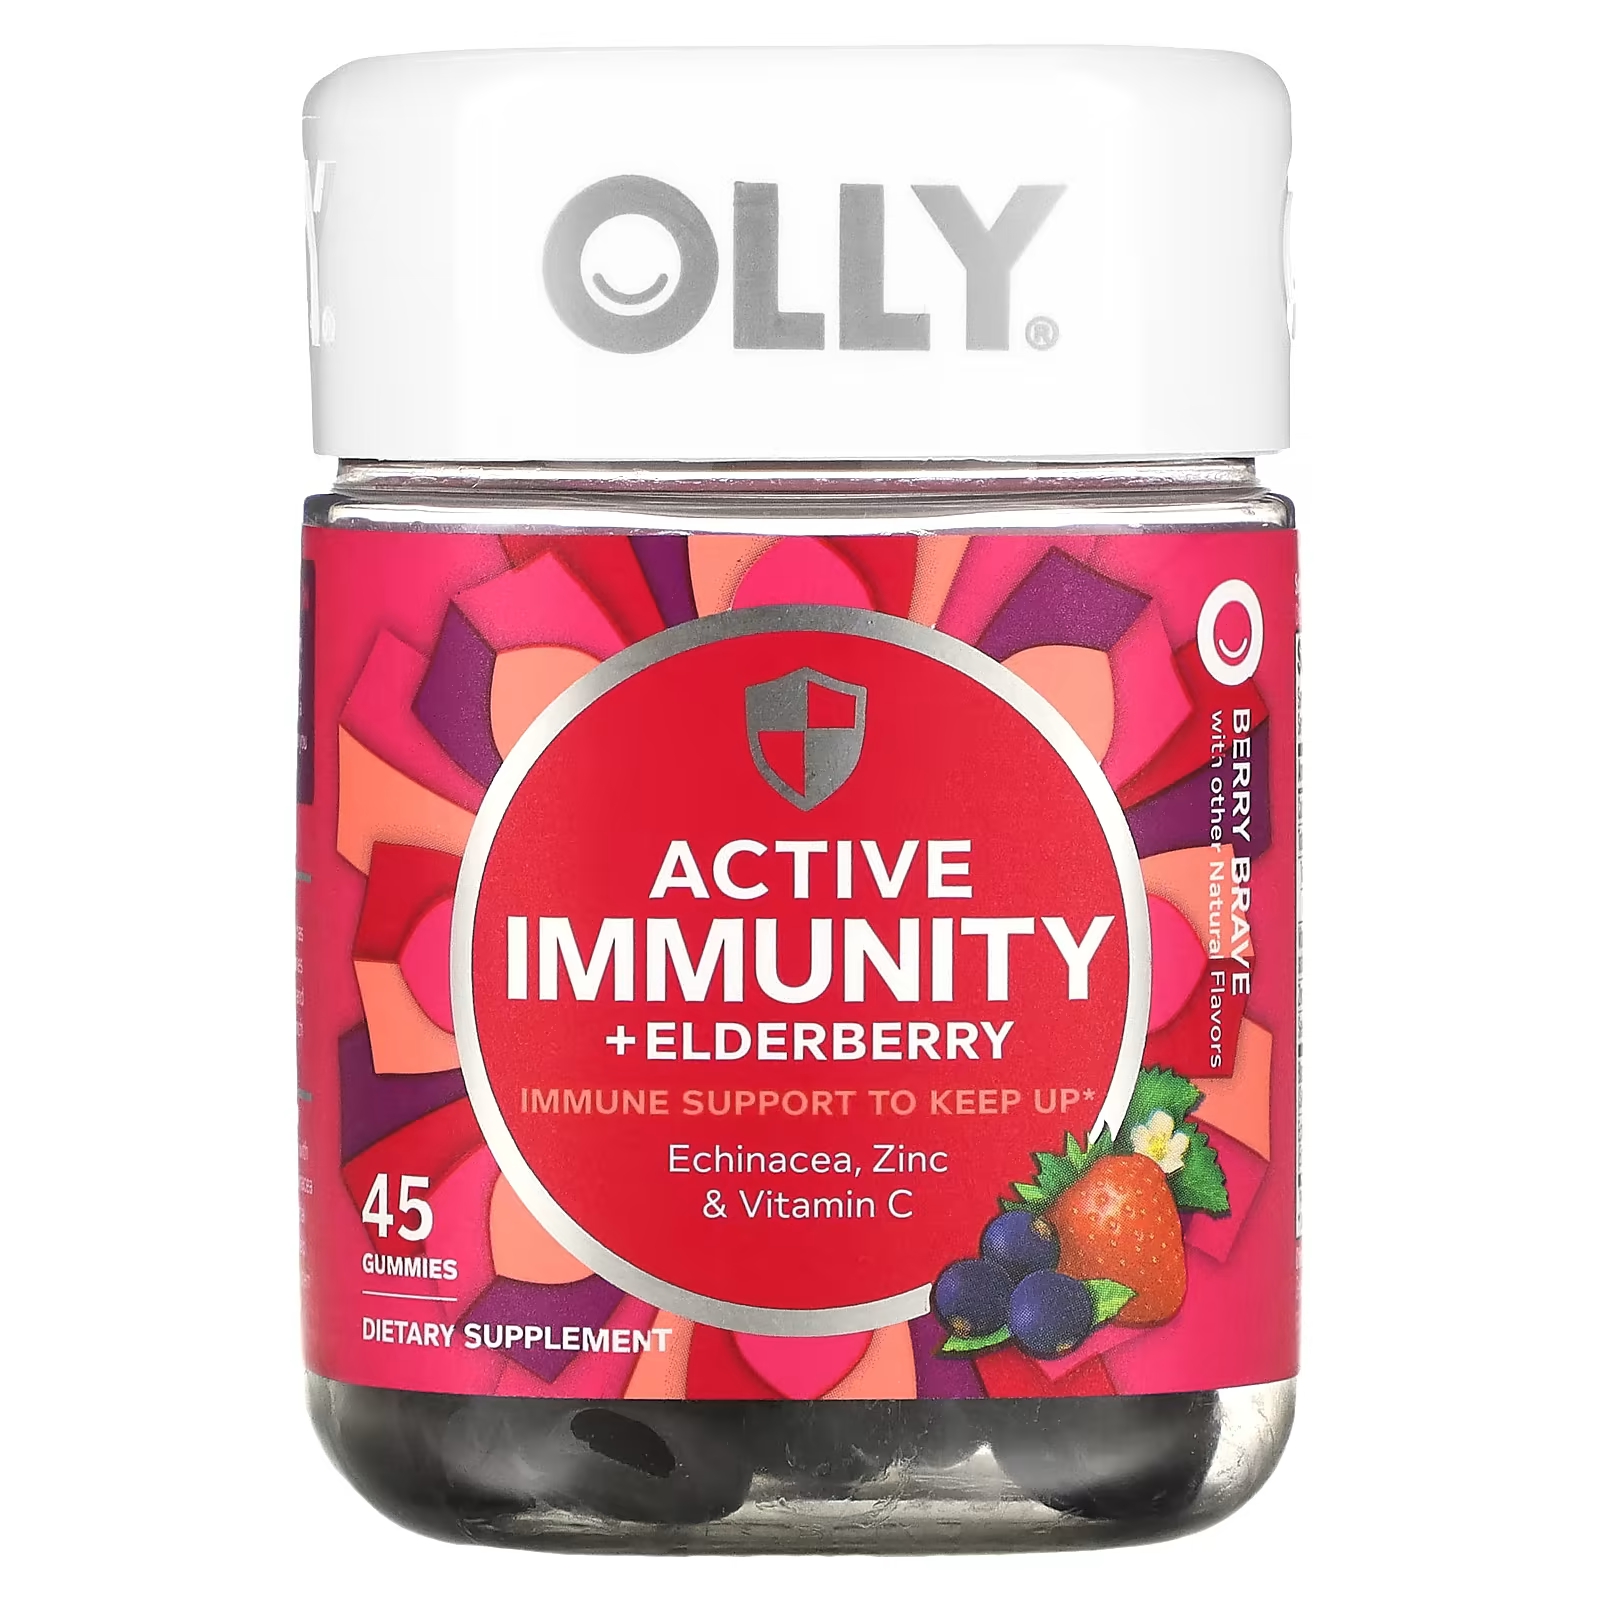 Пищевая добавка Olly Active Immunity + Elderberry Berry Brave, 45 жевательных таблеток цена и фото